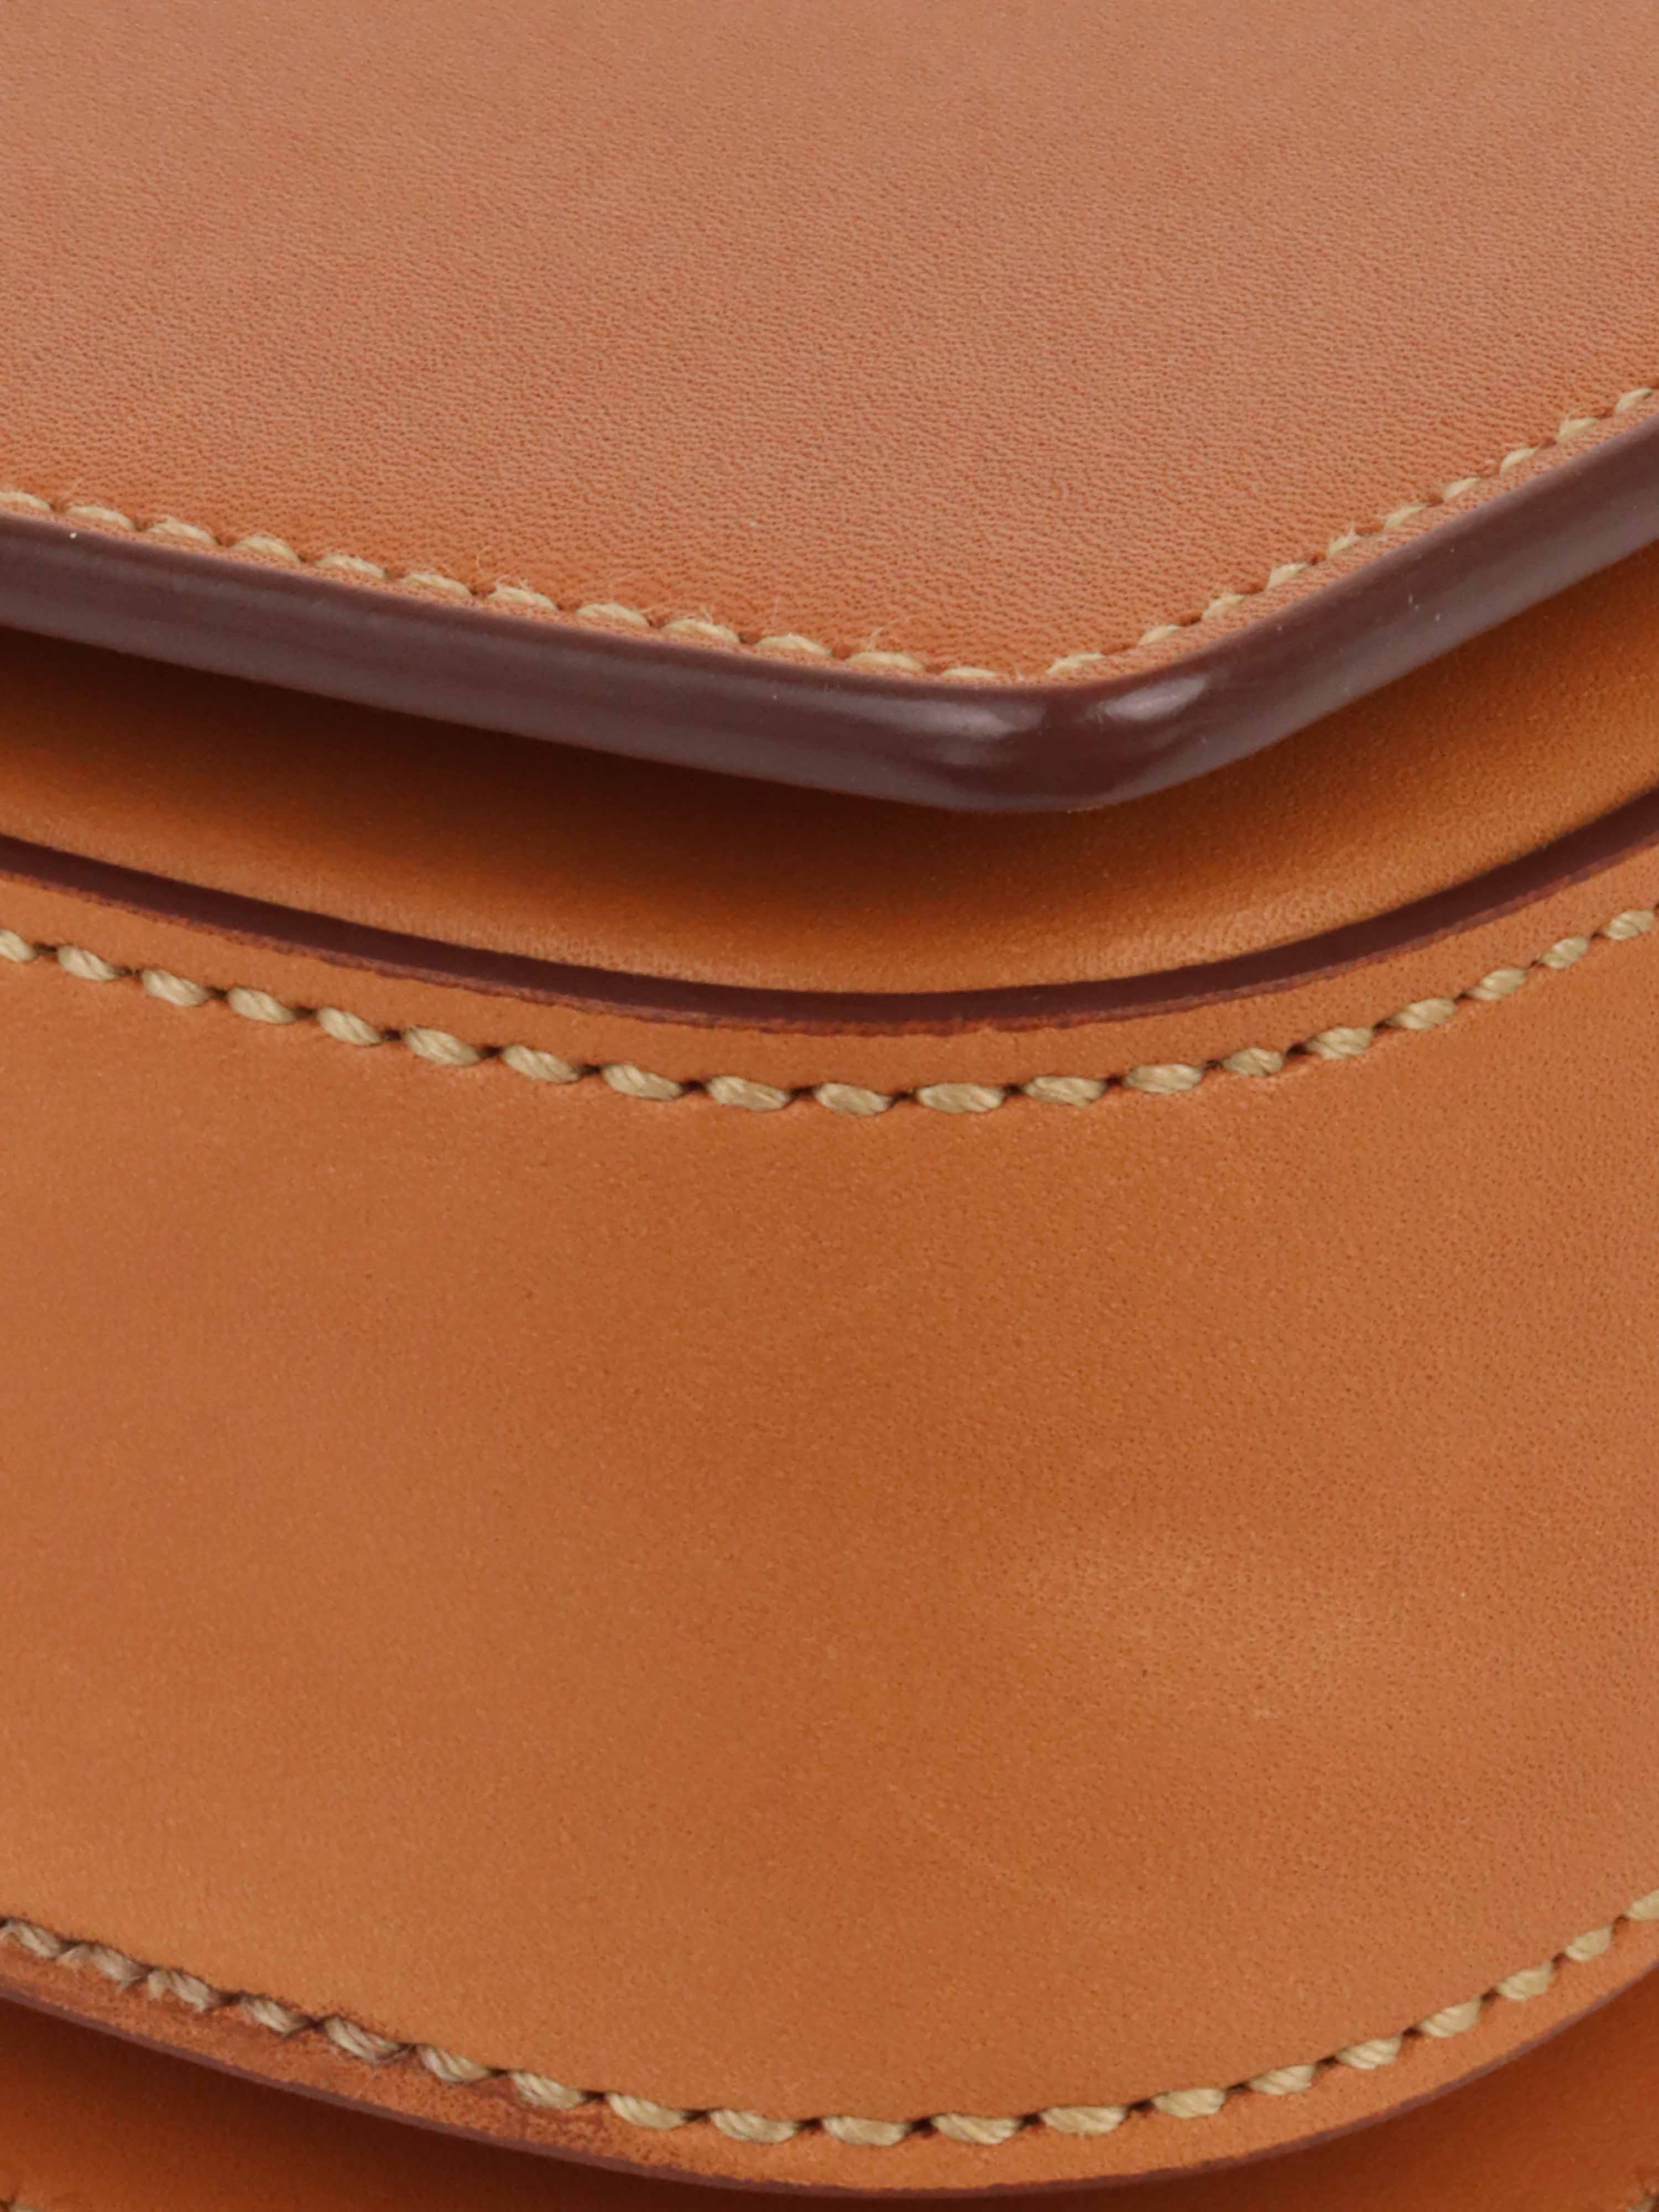 Saint Laurent Caramel Box Leather Shoulder Bag.